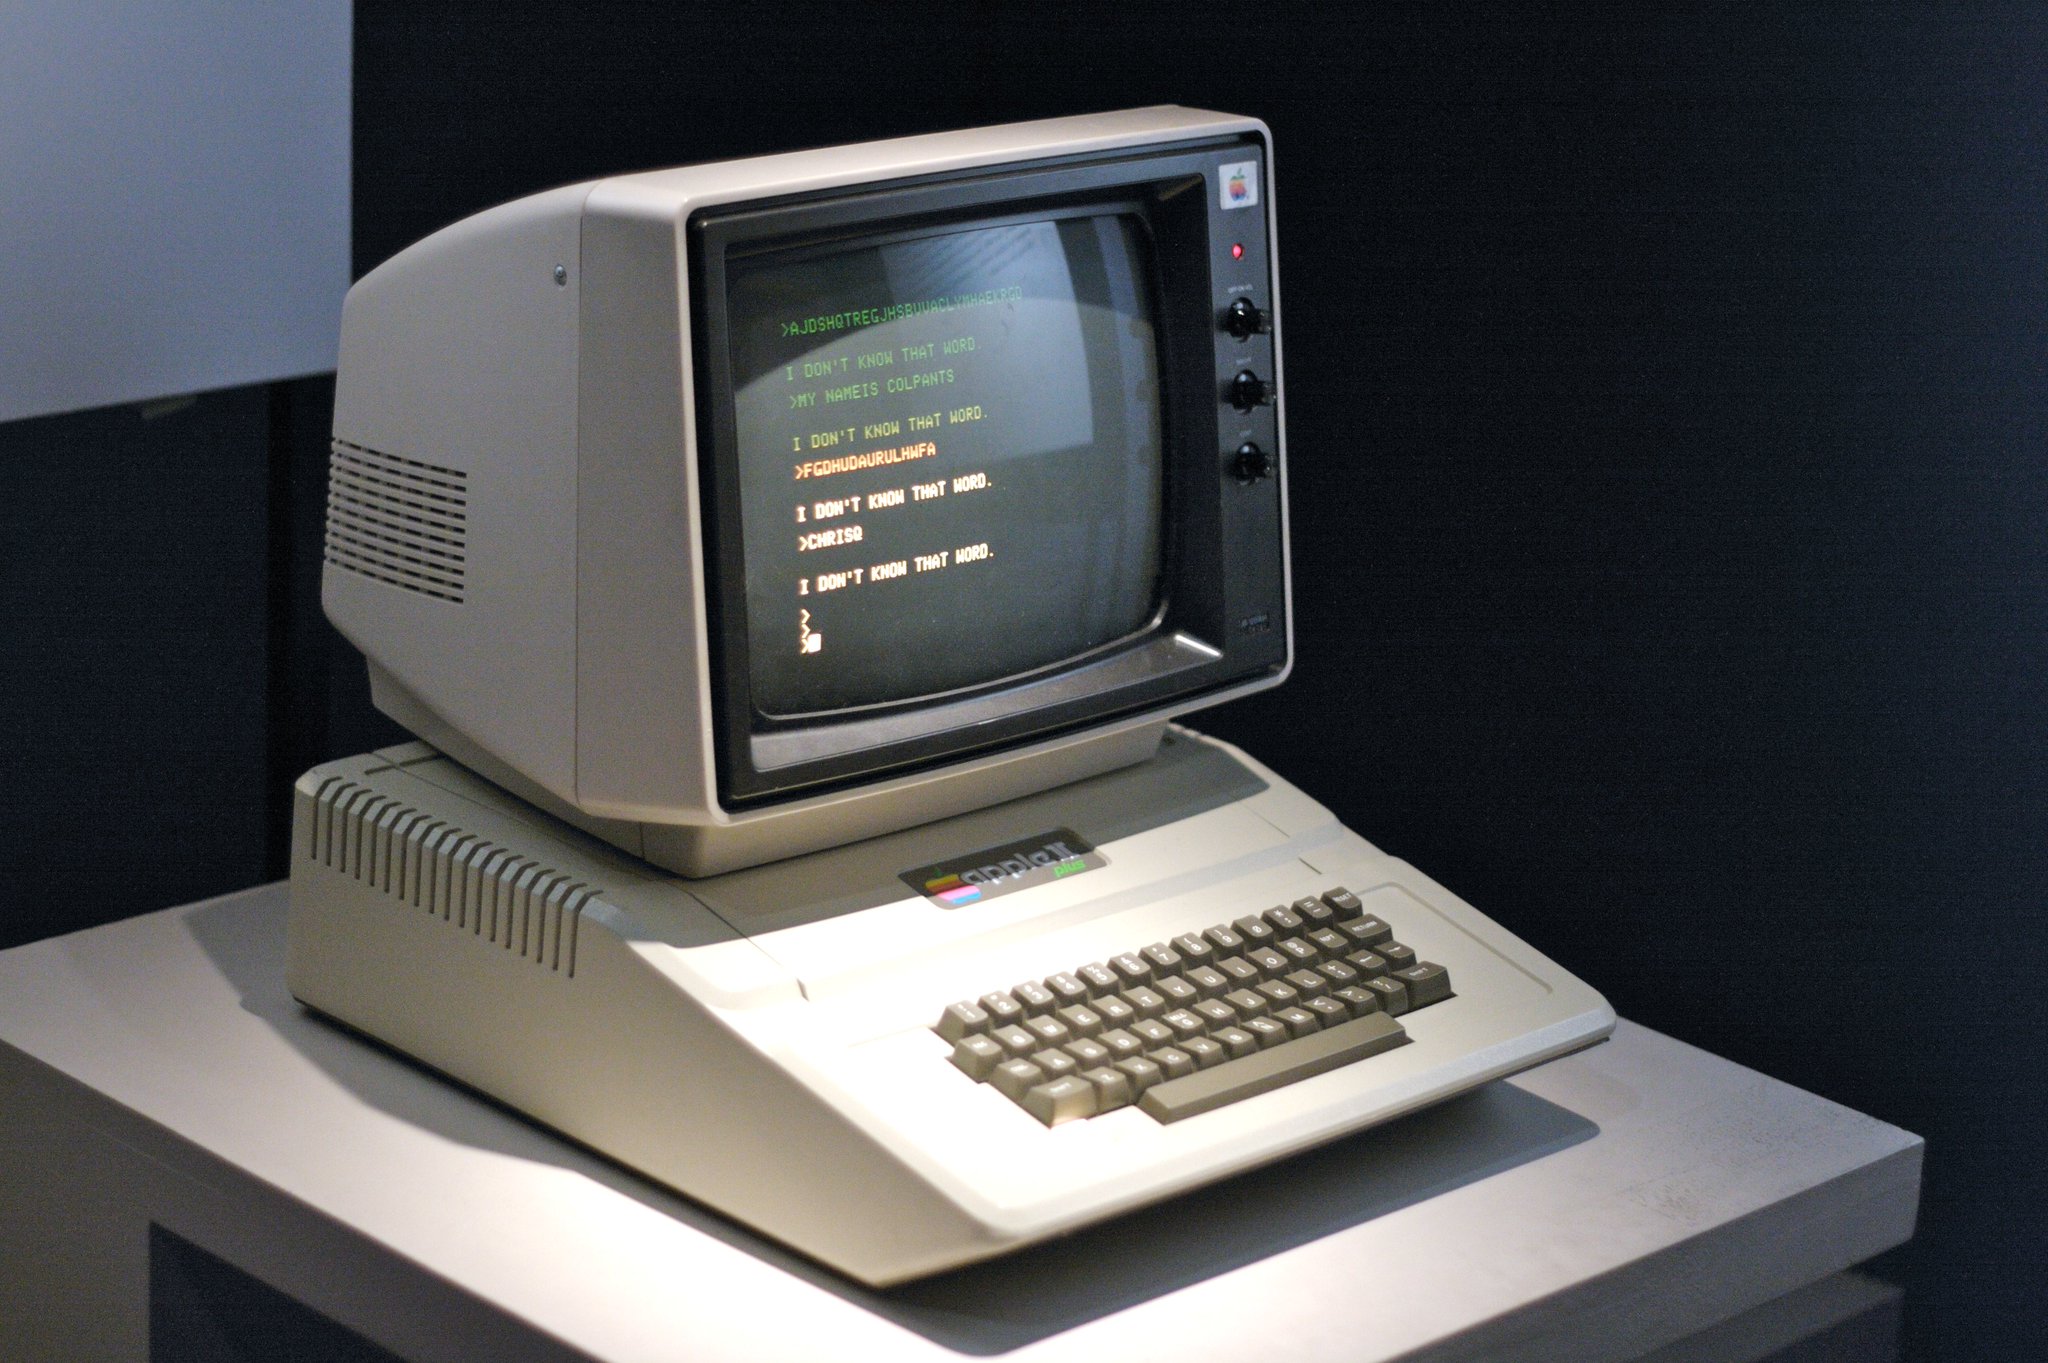 Happy birthday to Steve Wozniak, inventor of the Apple II computer.  